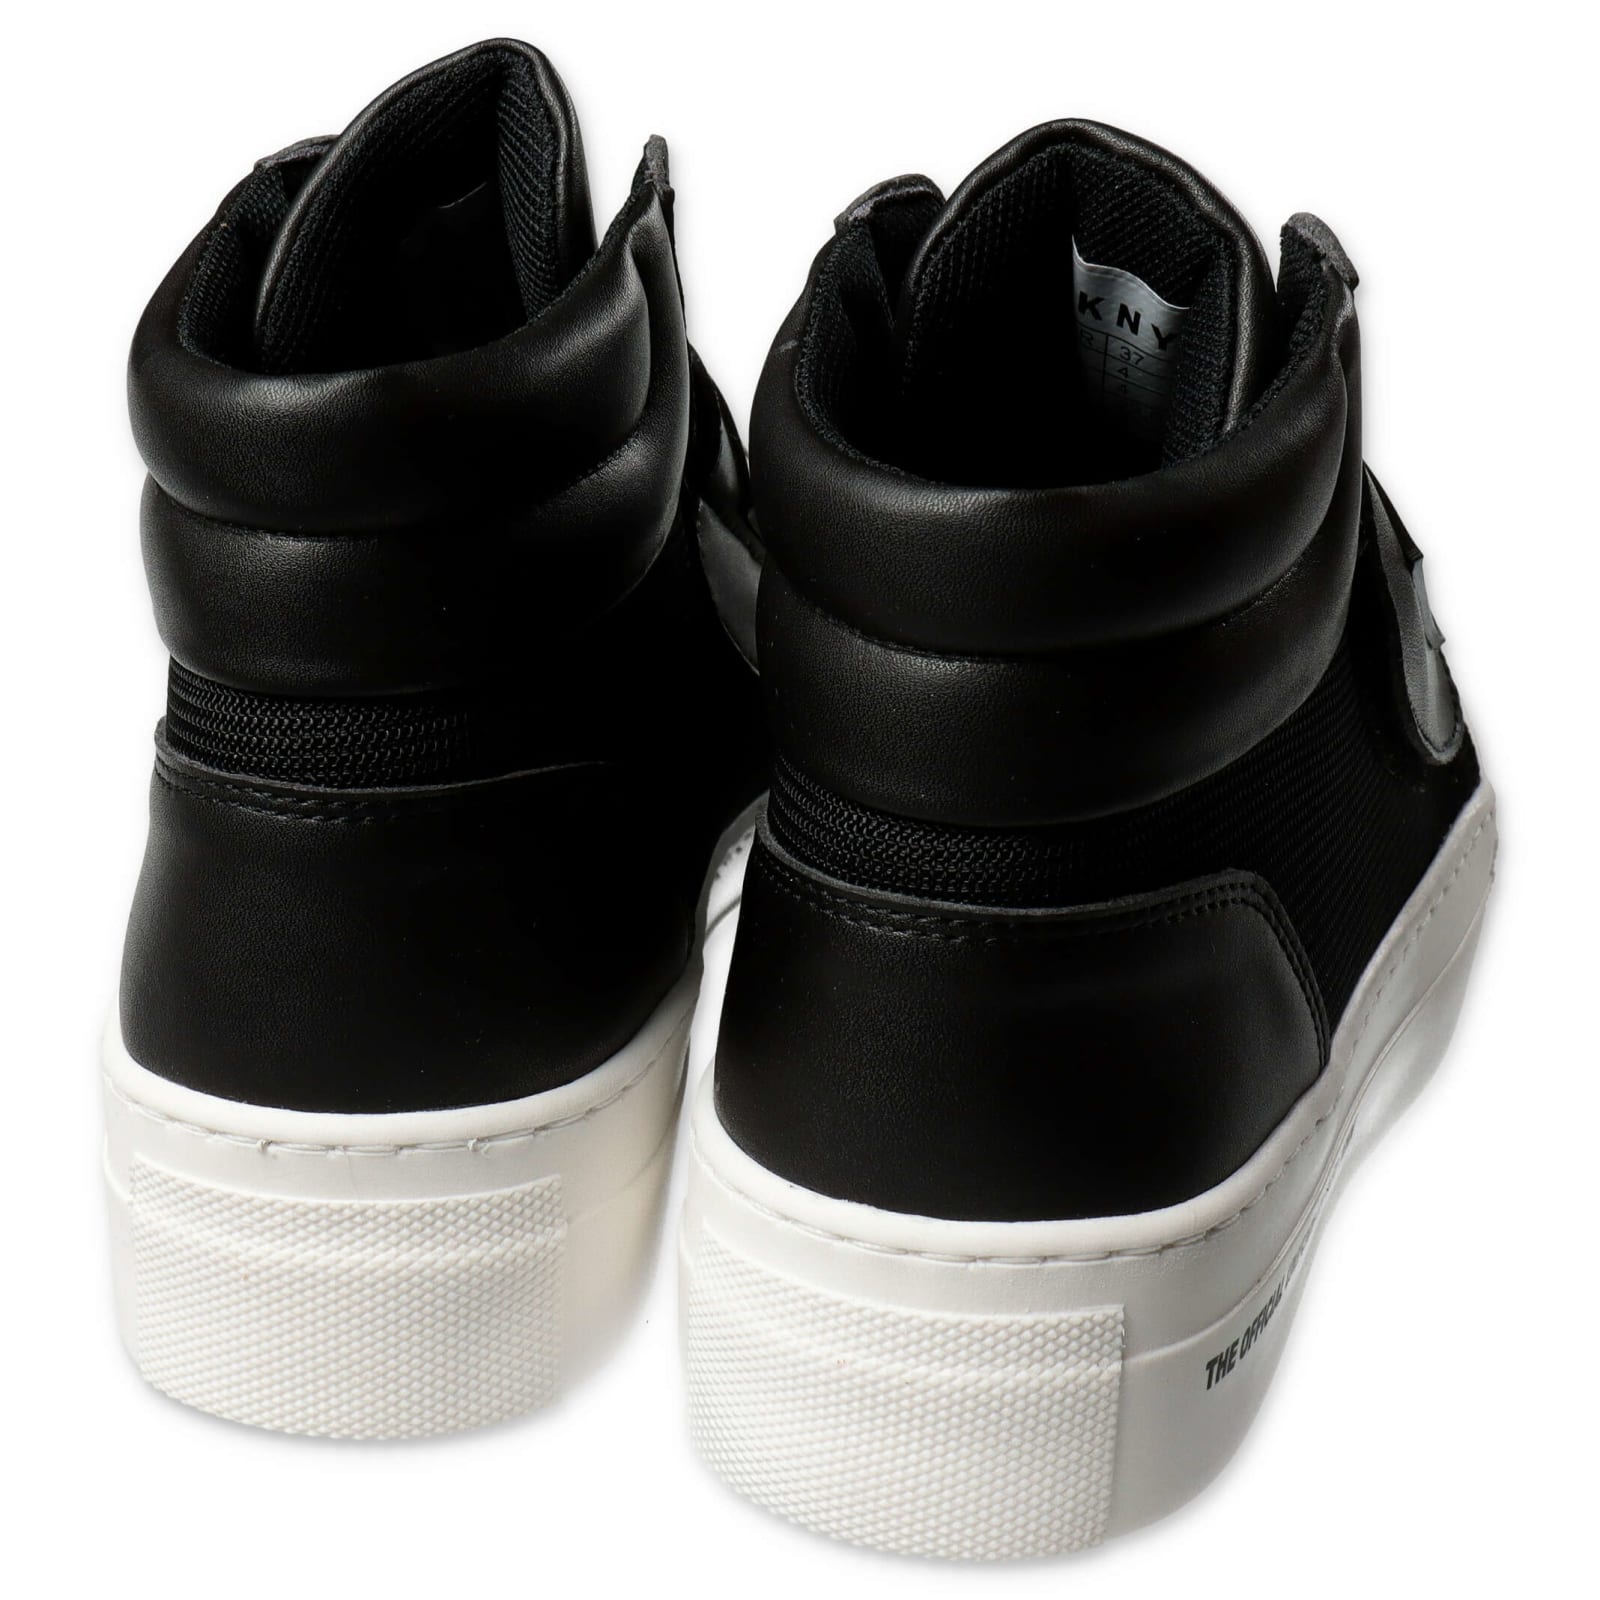 dkny black shoes